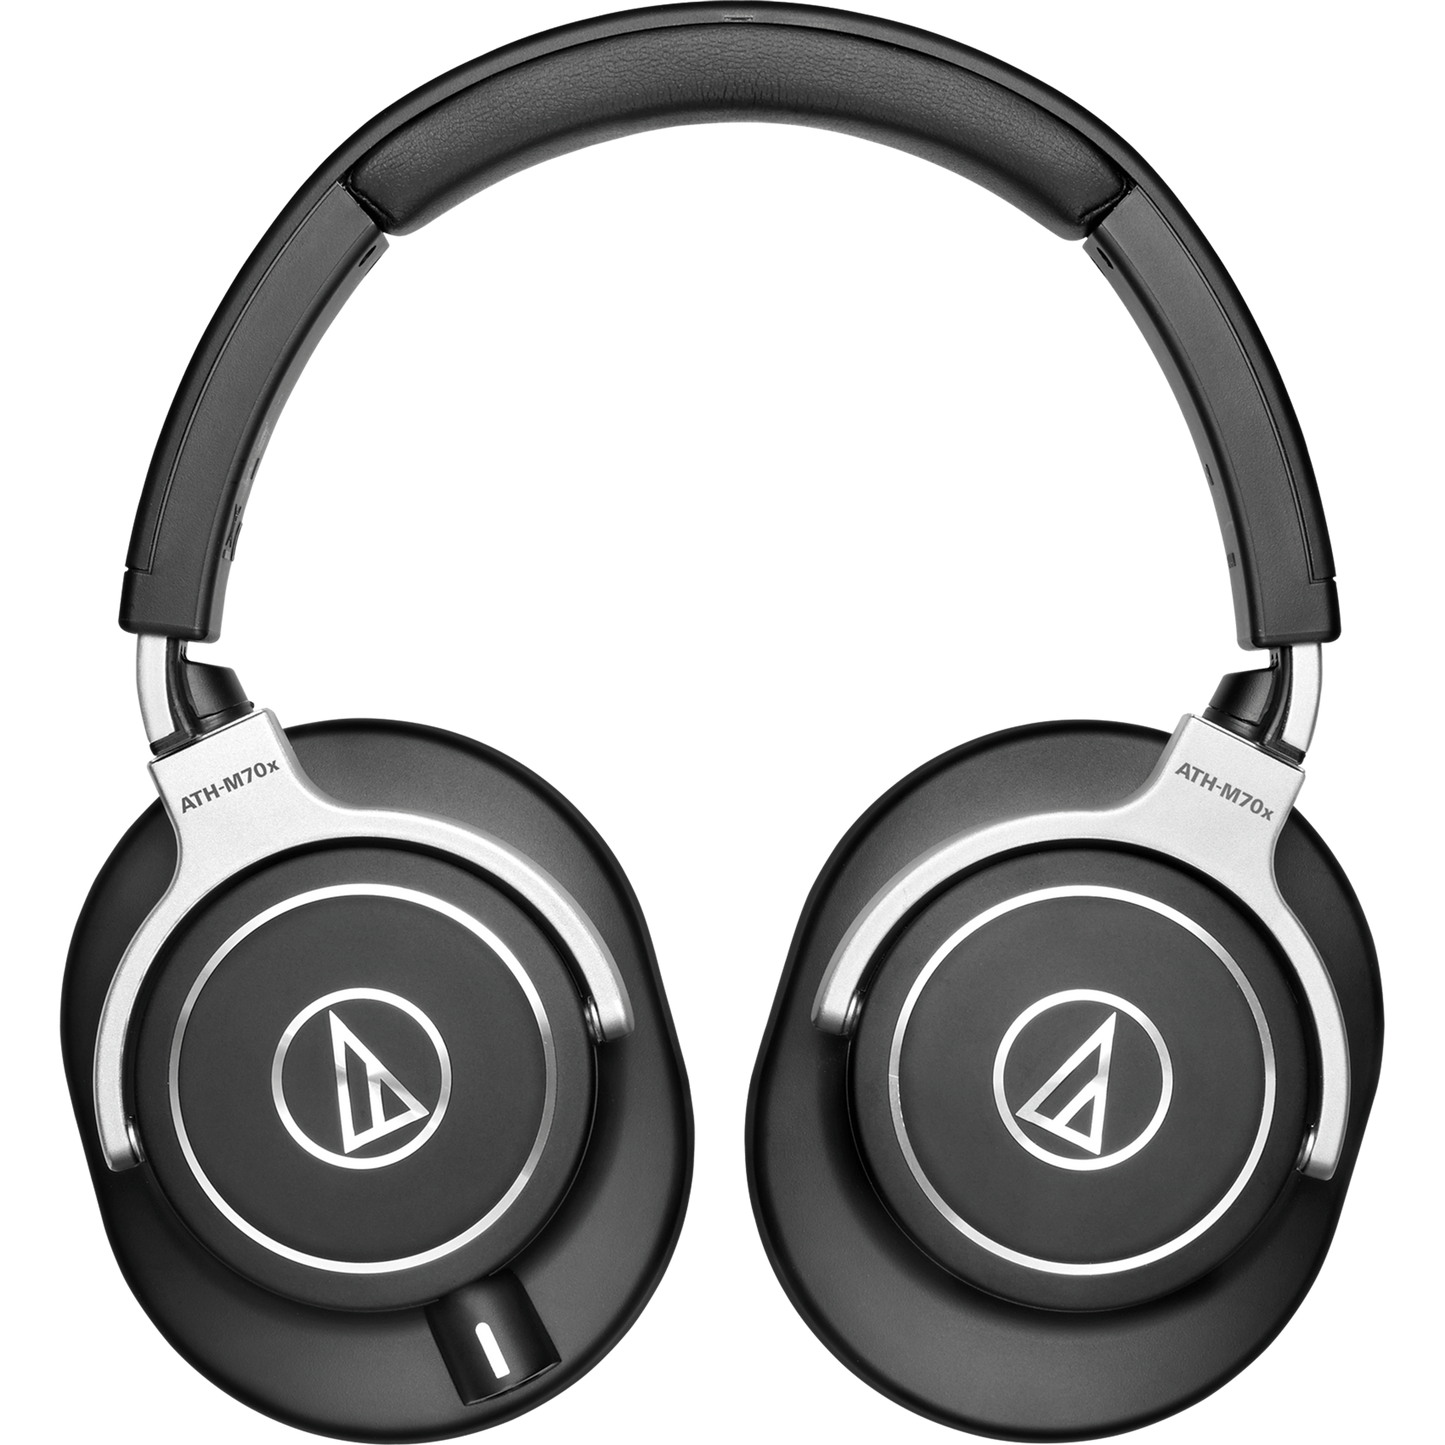 Audio Technica ATH-M70X Pro Monitor Headphones